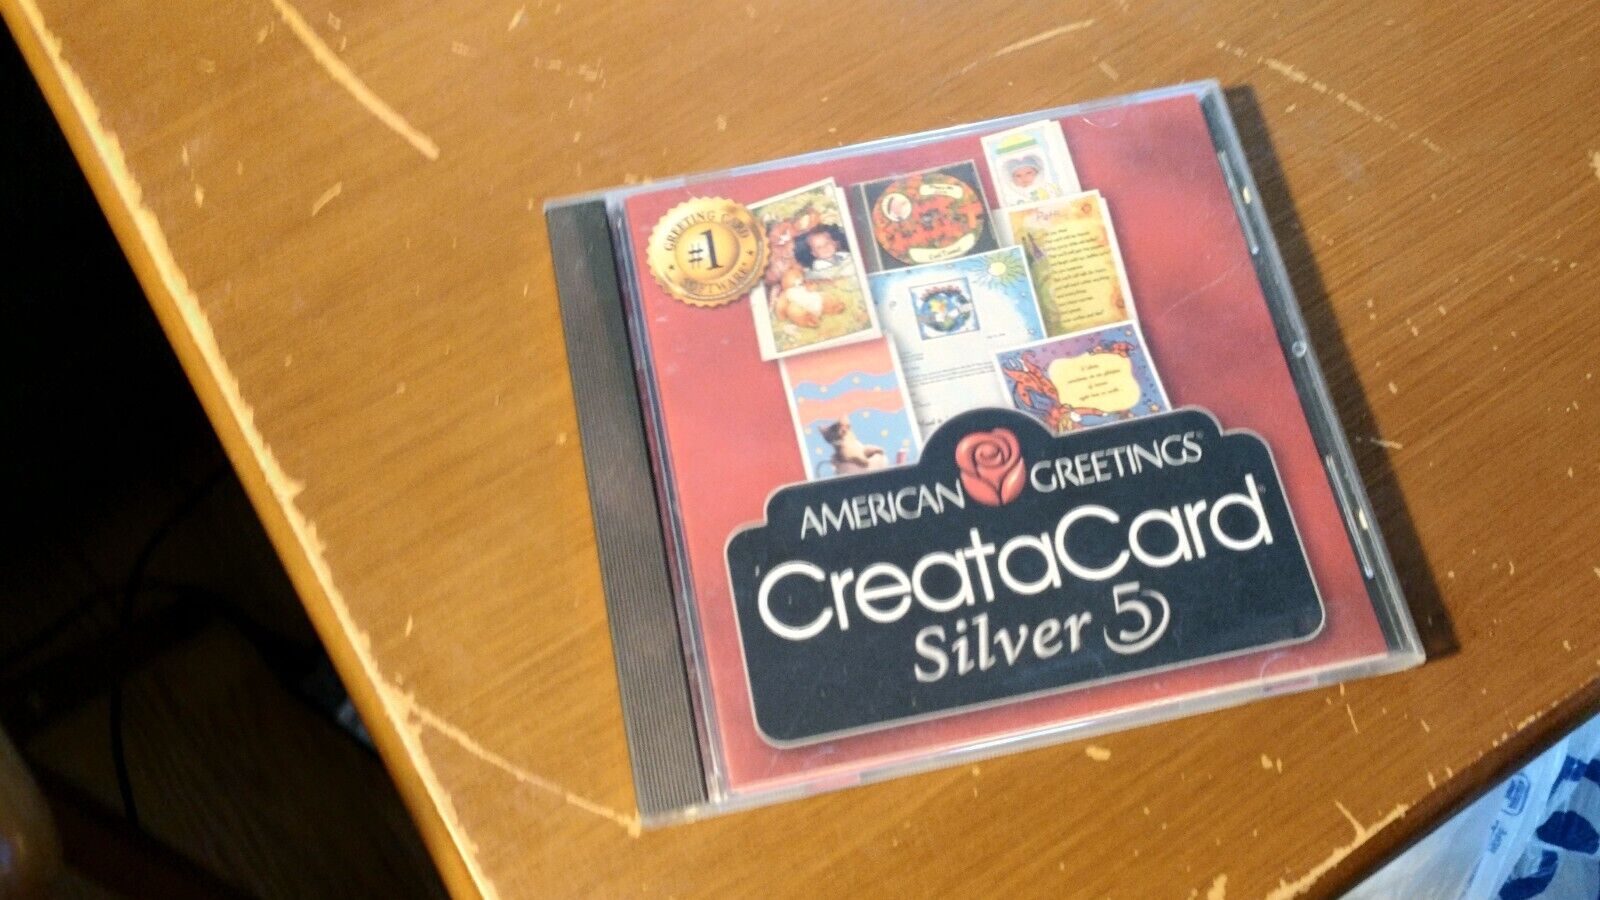 American Greetings CreataCard Silver 5 greetings 99 microsoft